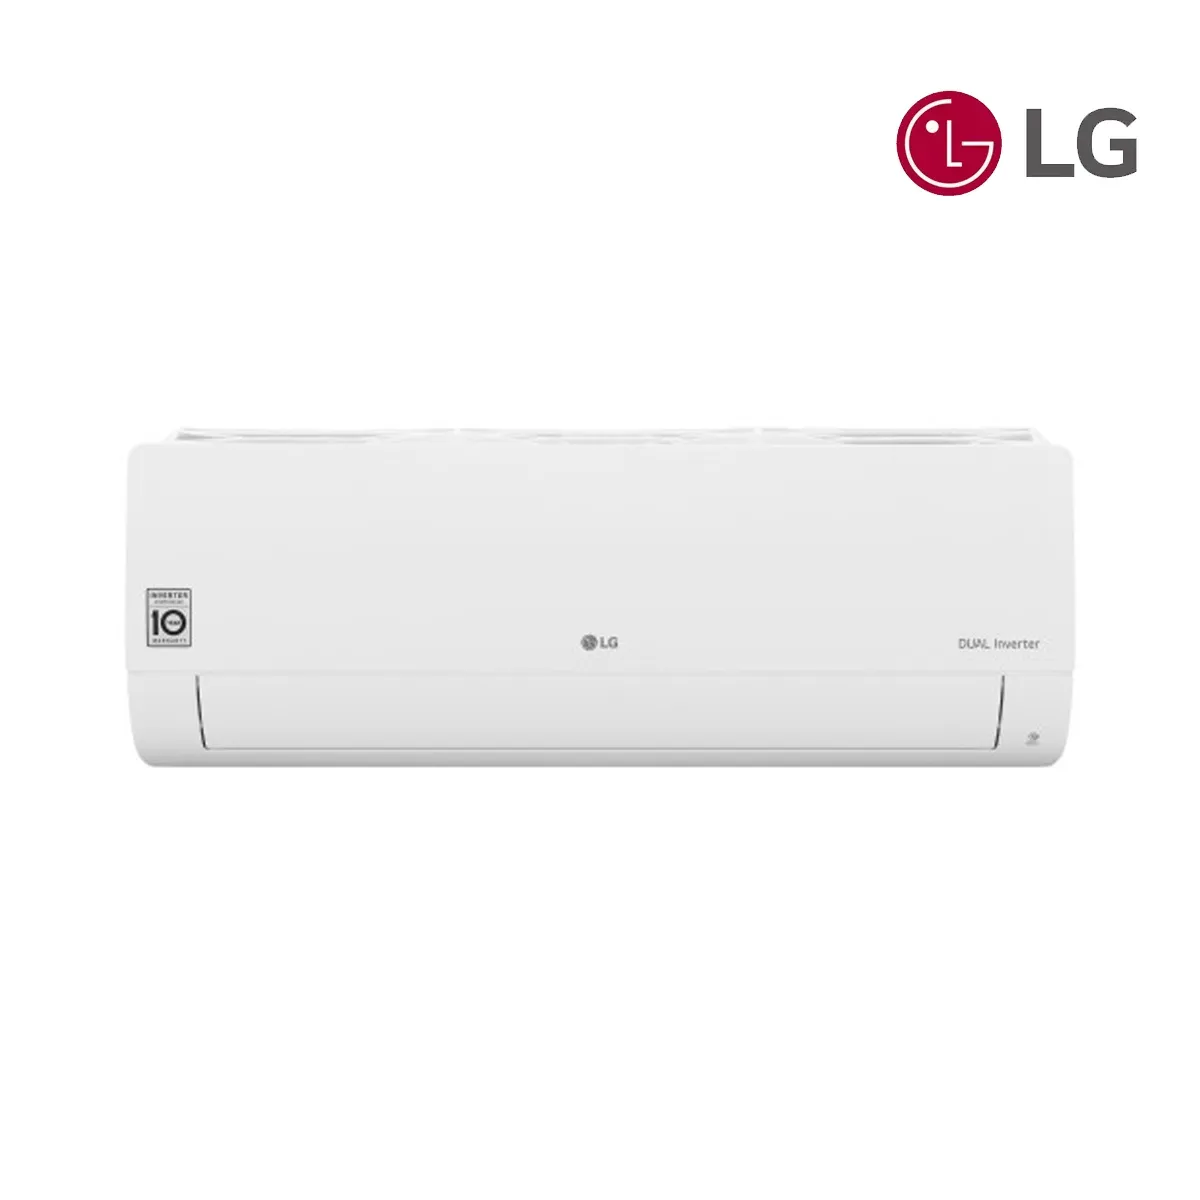 Klima uređaj LG Confort S12ET NSJ/S12ET set